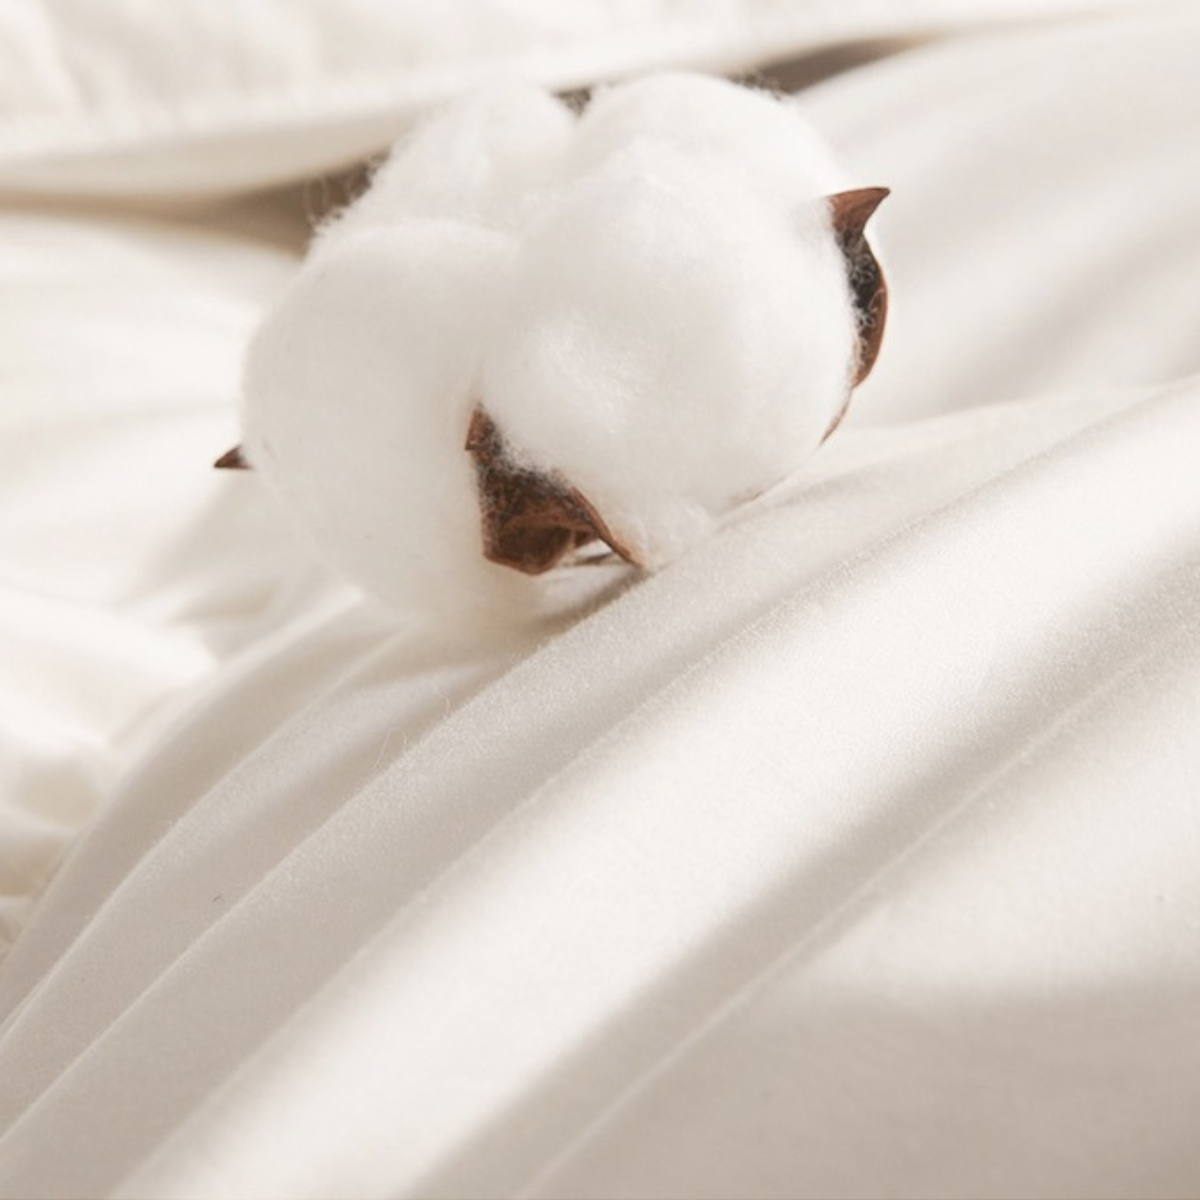 down comforters on sale - Warmy & Tummy